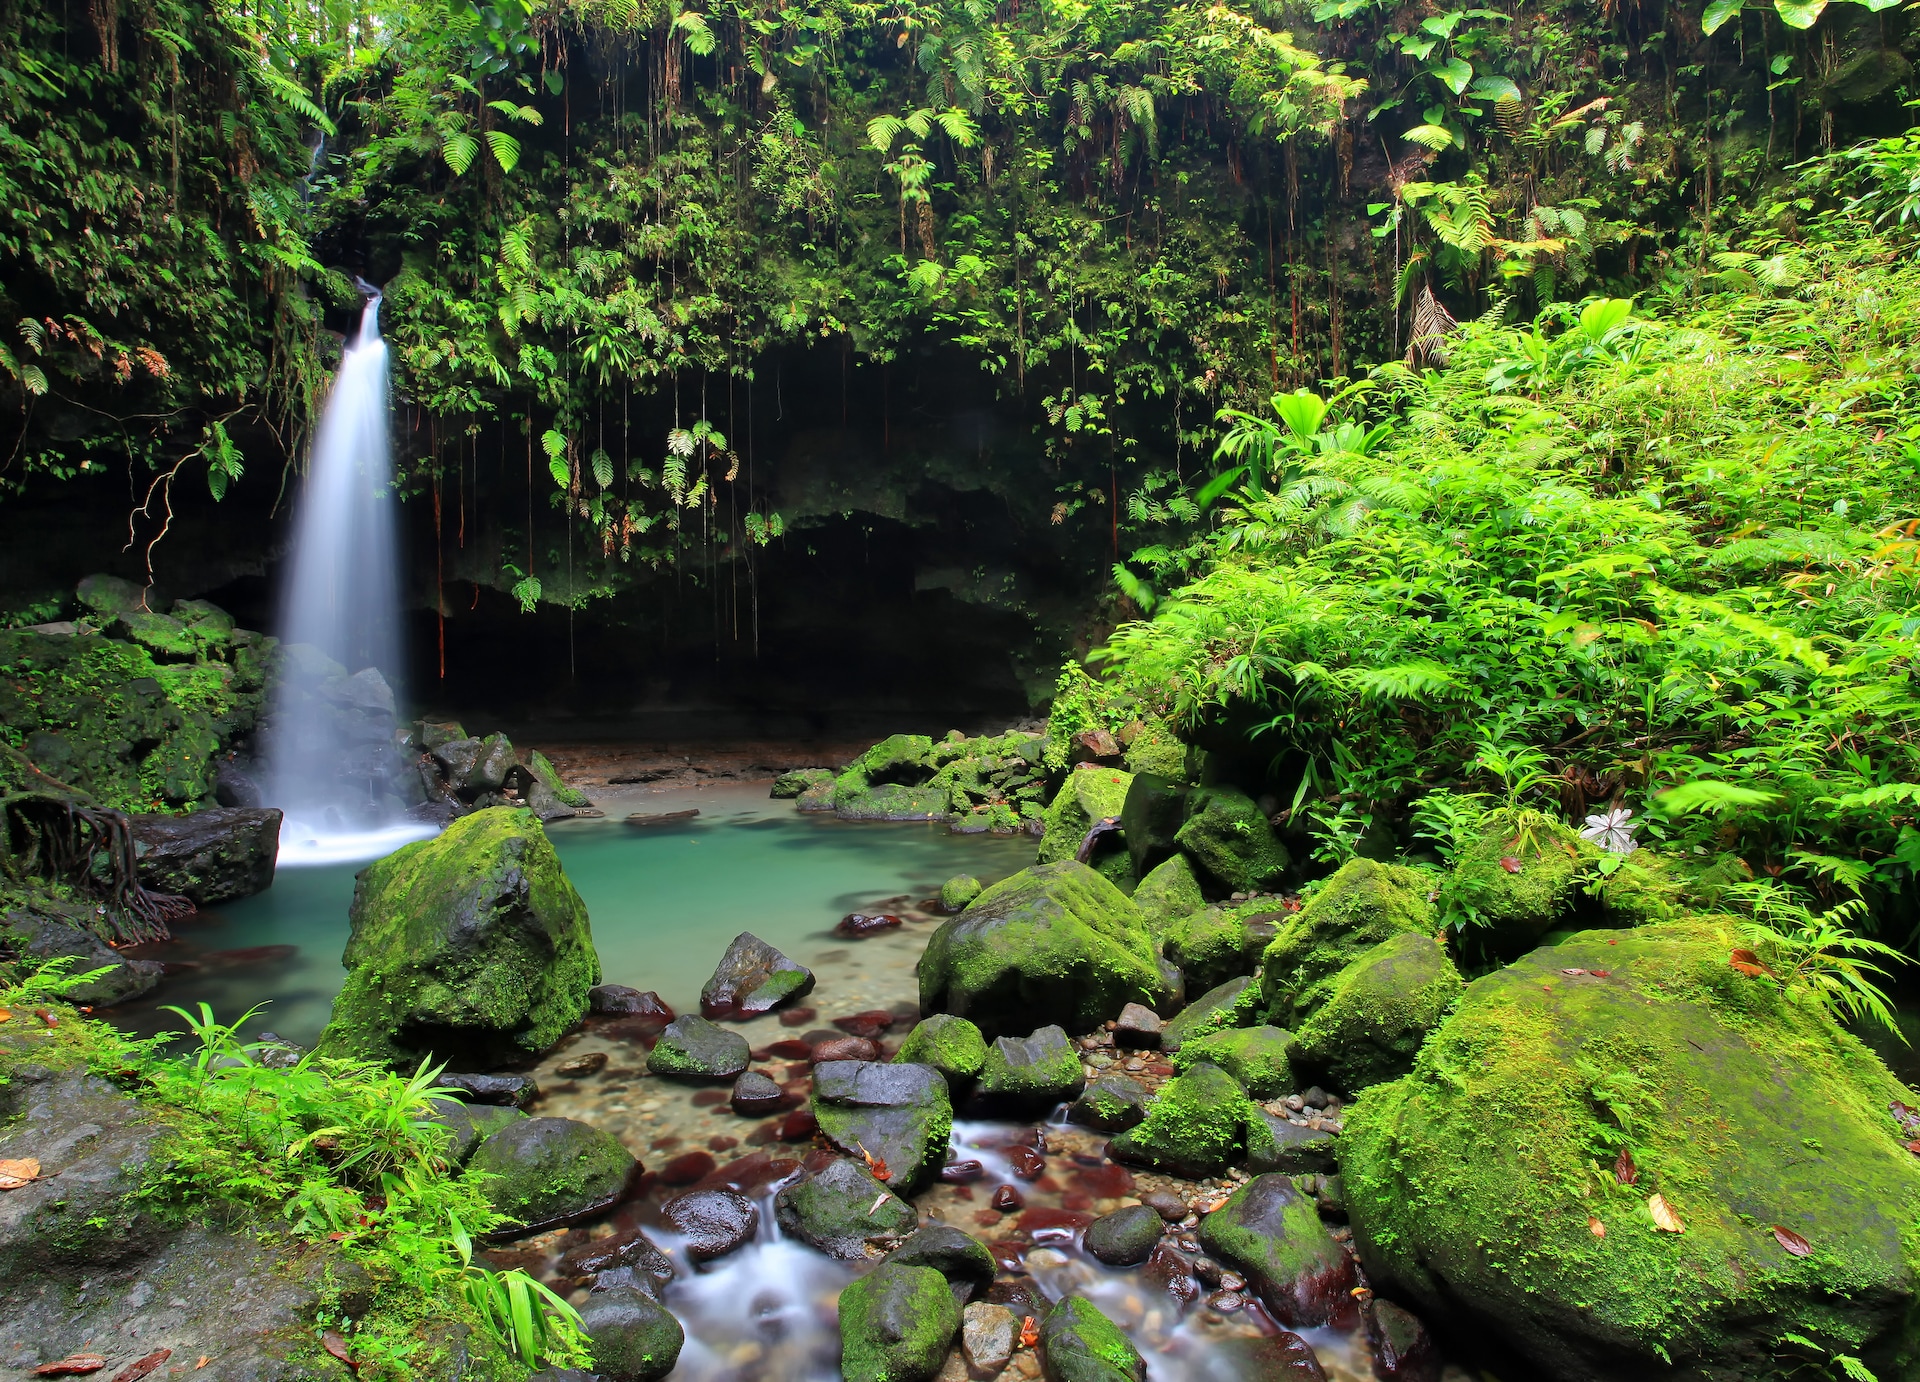 emerald pool with waterfall